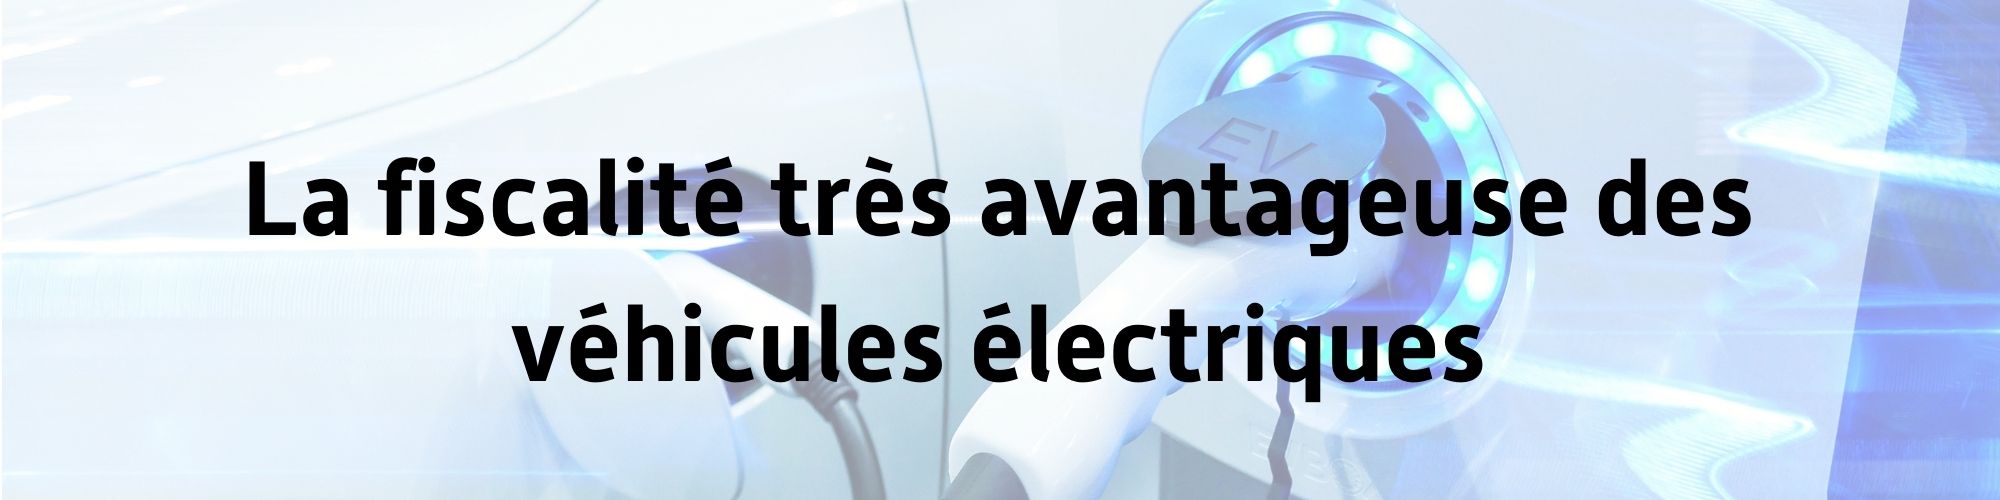 fiscalite_vehicules_electriques